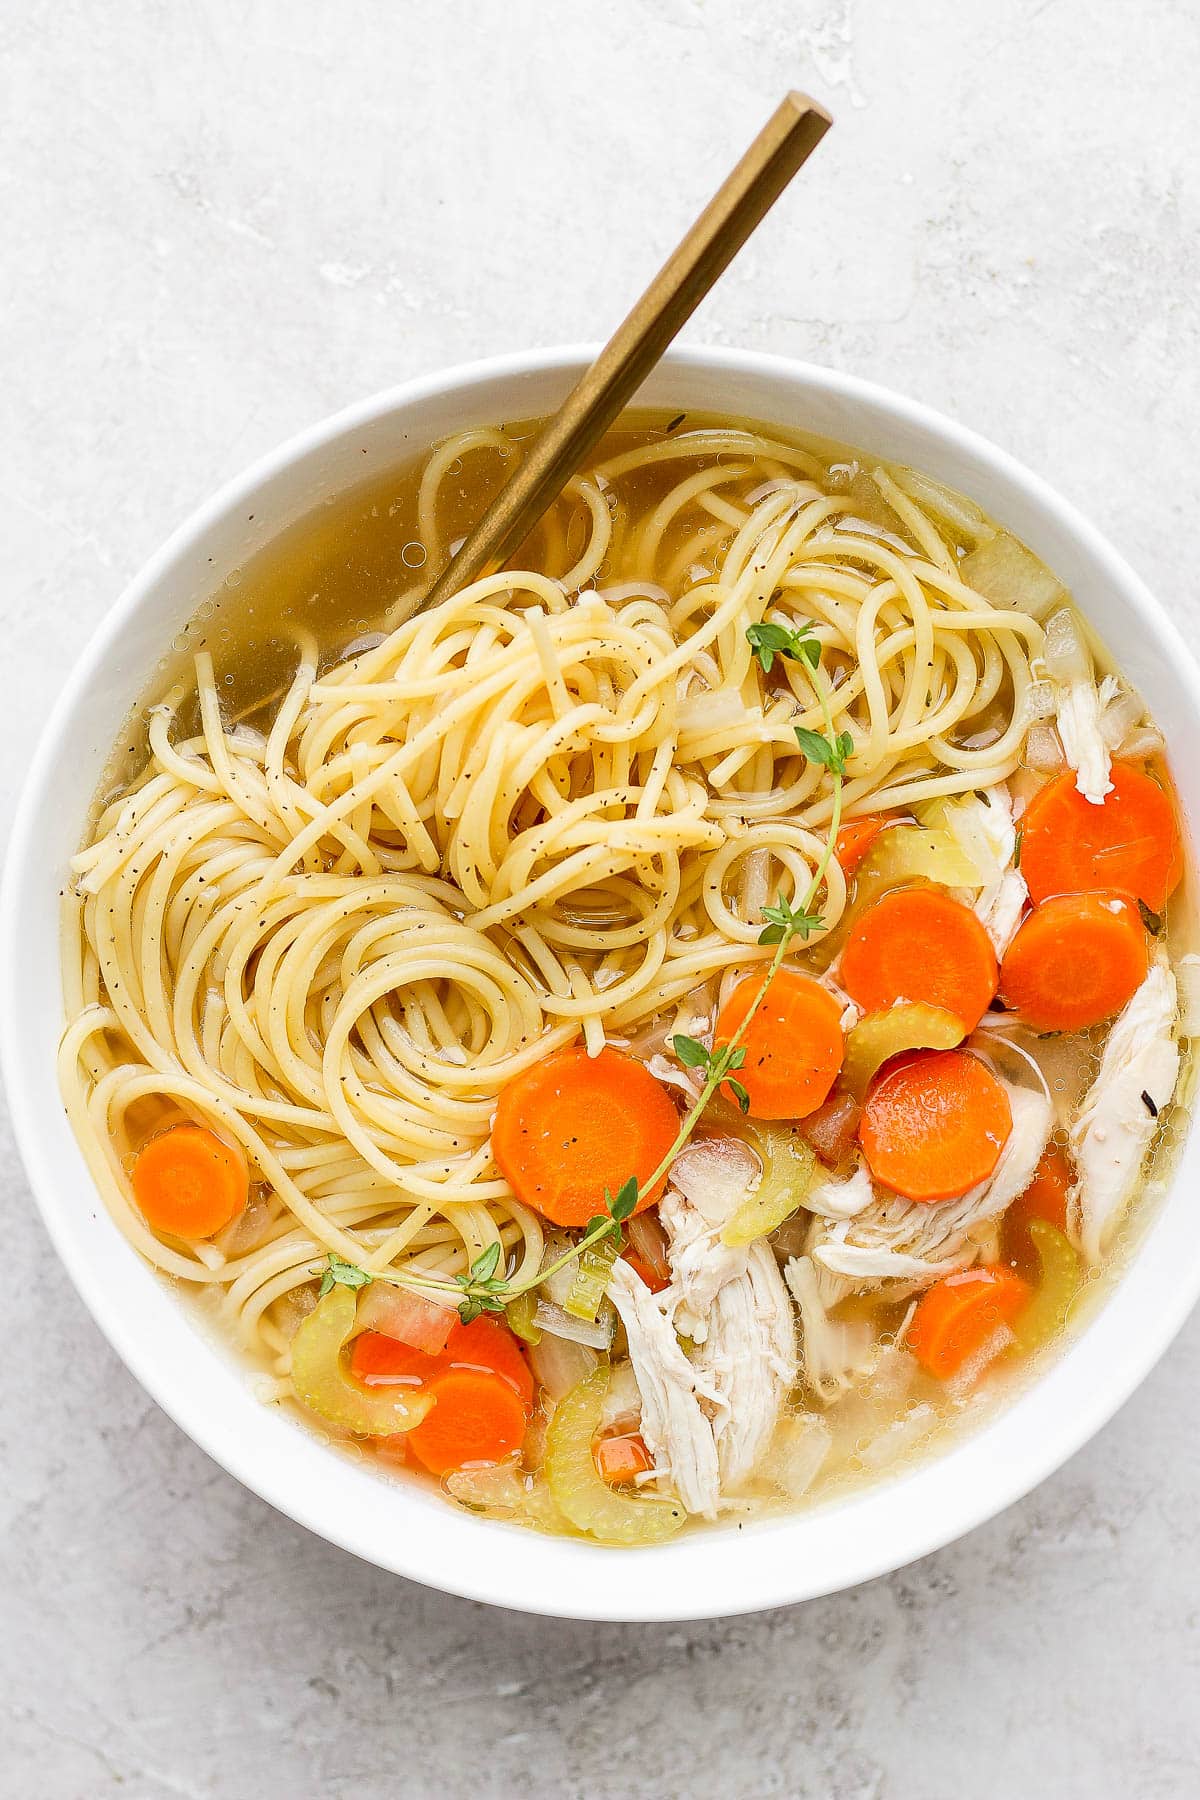 Slow cooker chicken noodle soup recipe.